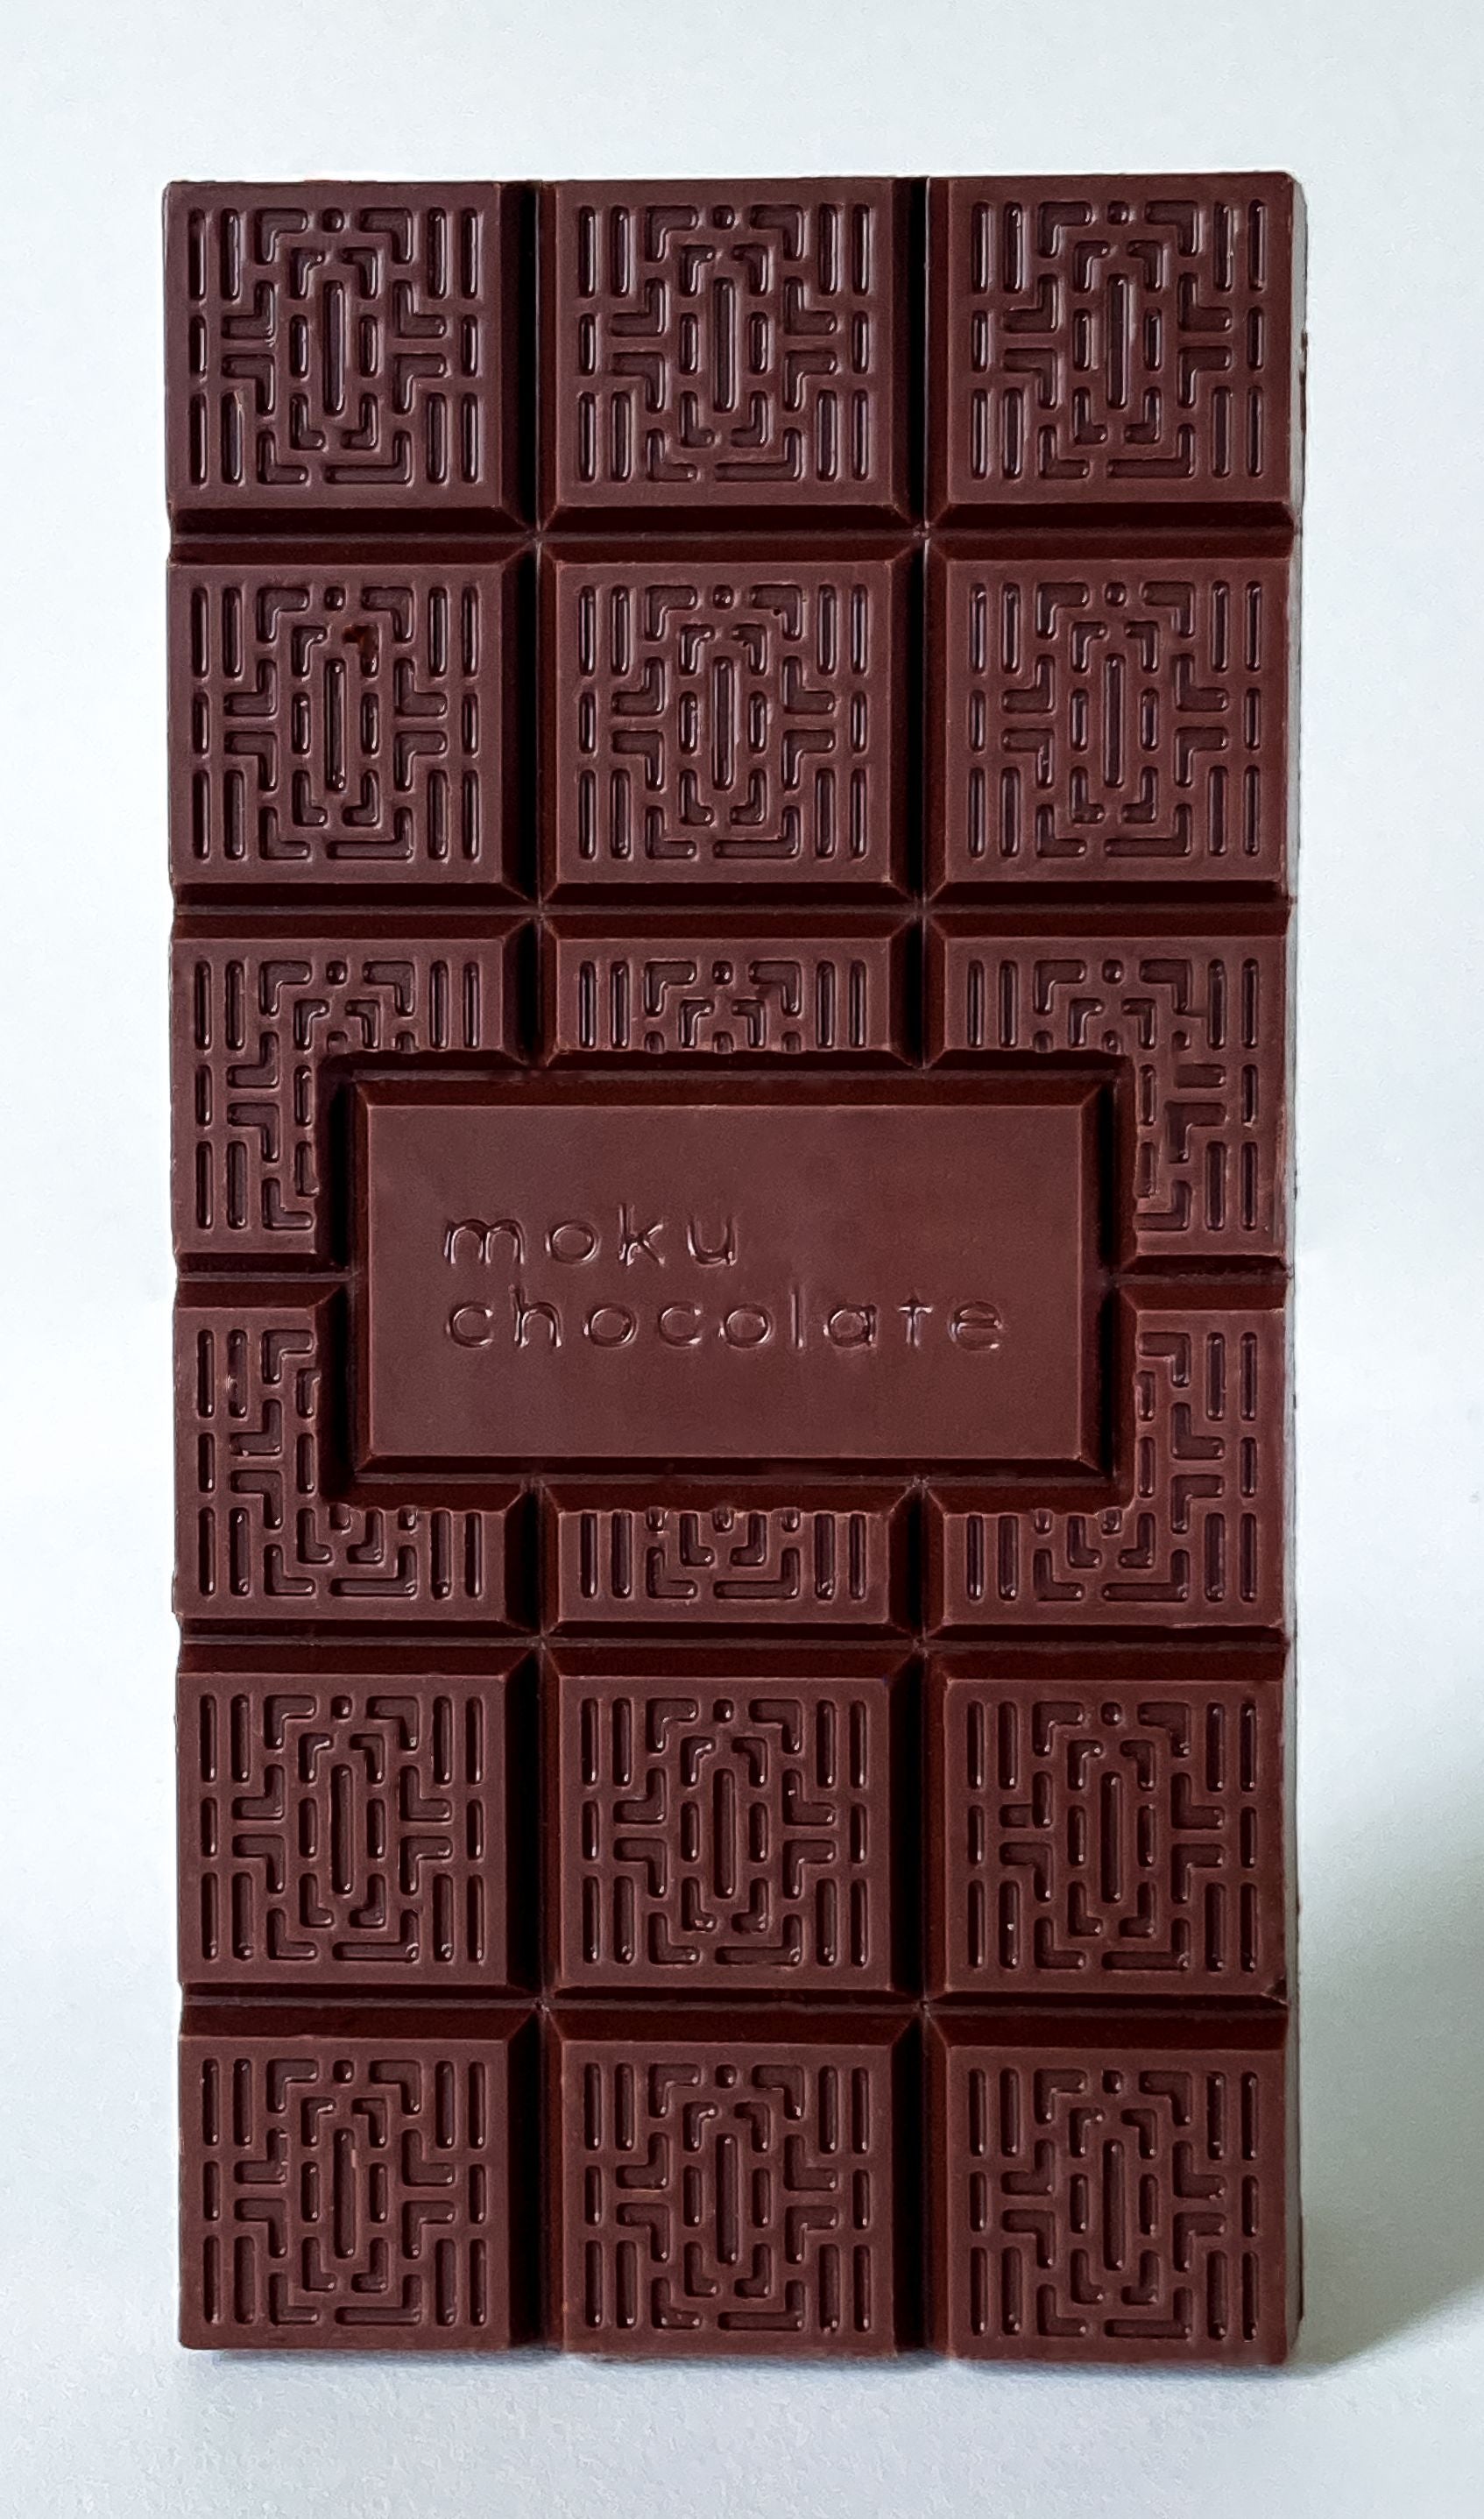 Nicaragua 70% Dark Chocolate